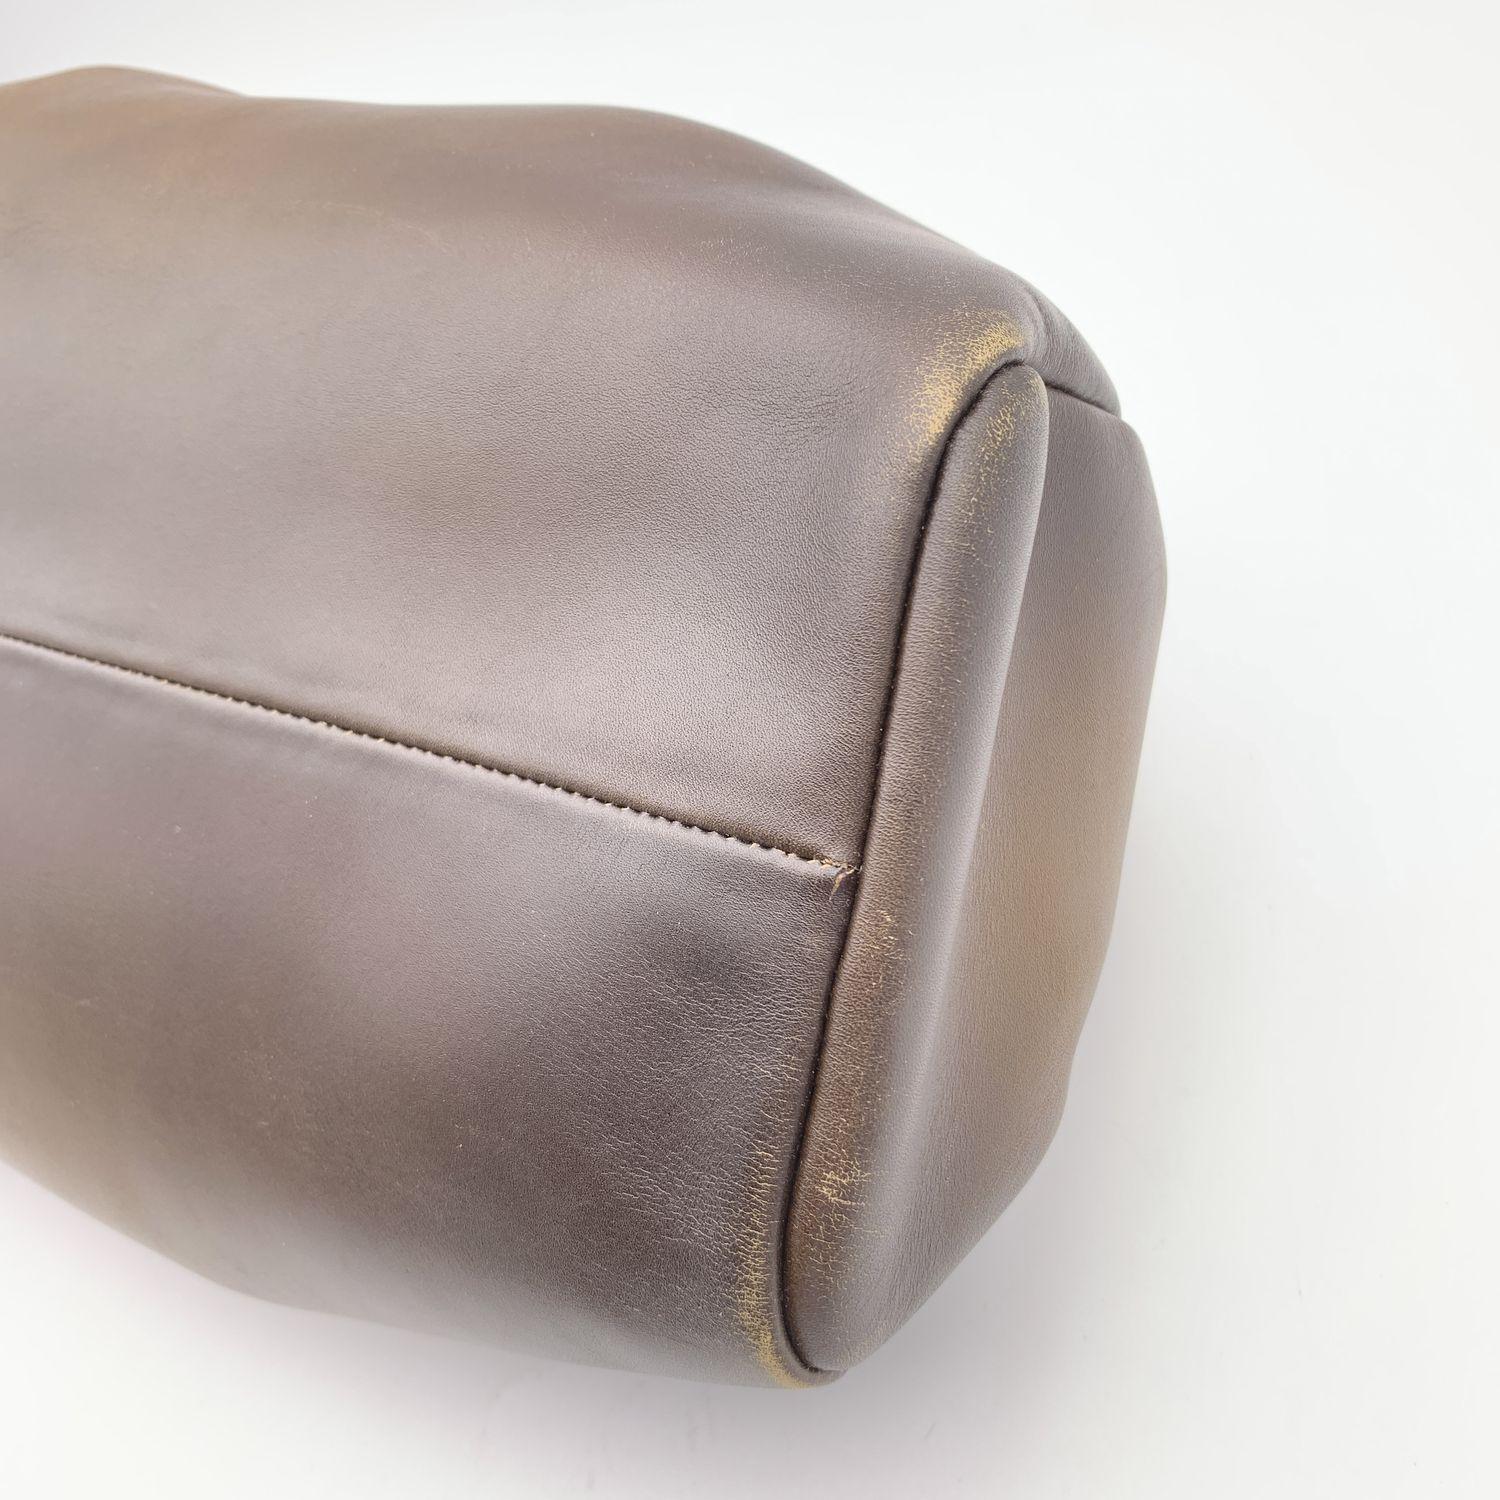 Gucci Brown Leather Wood Handles Bag Handbag Satchel For Sale 6